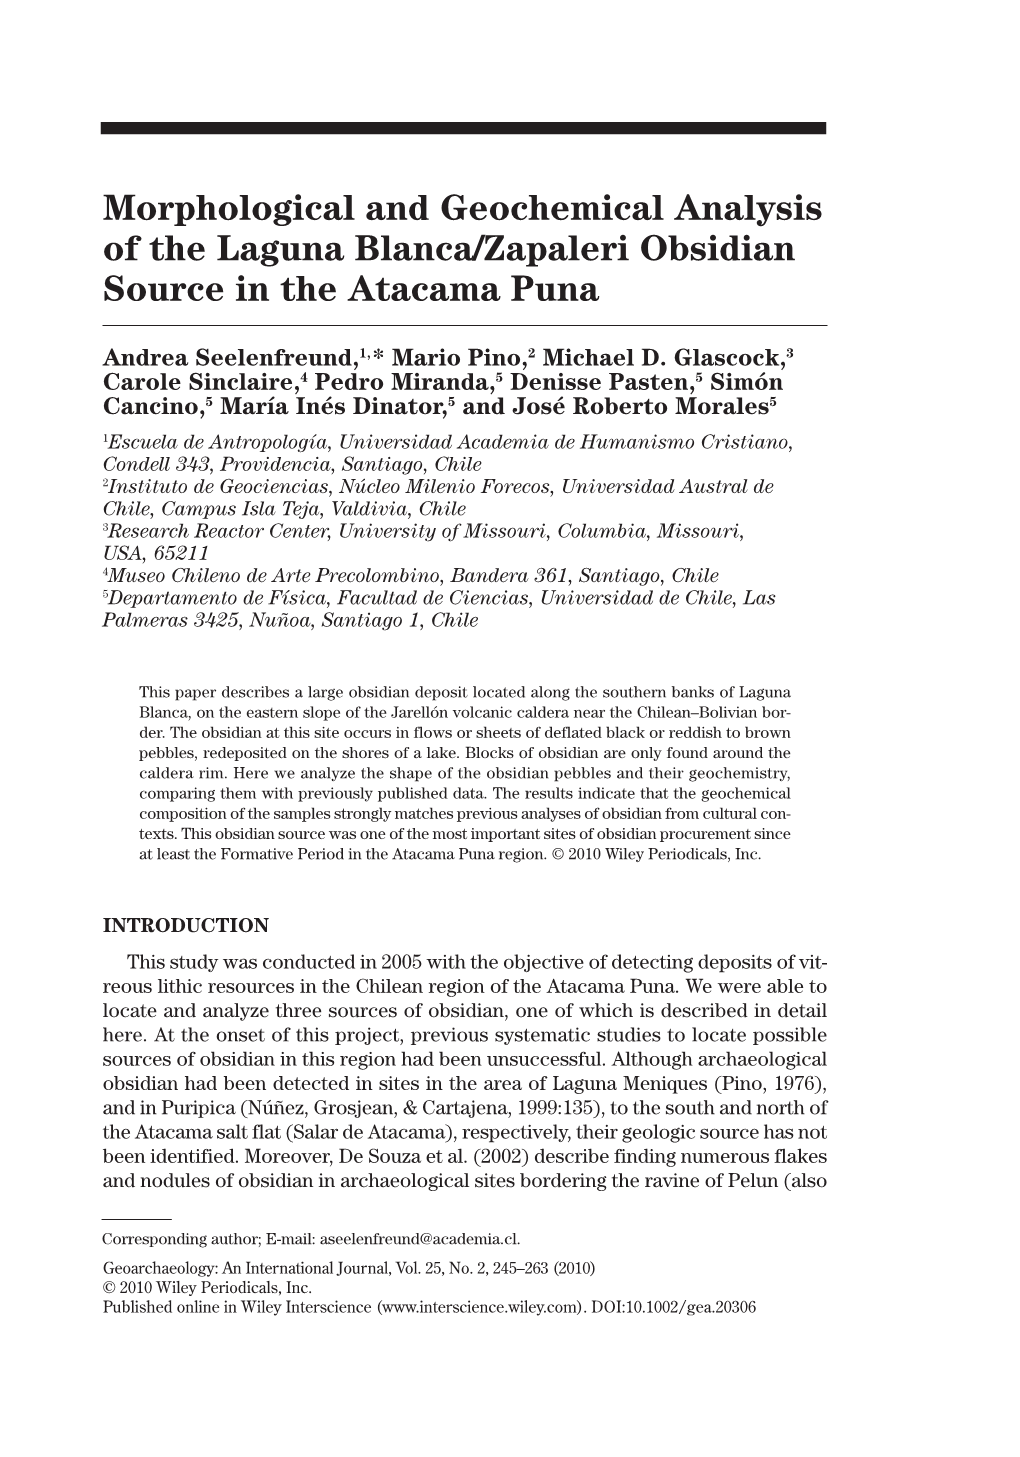 Morphological and Geochemical Analysis of the Laguna Blanca/Zapaleri Obsidian Source in the Atacama Puna